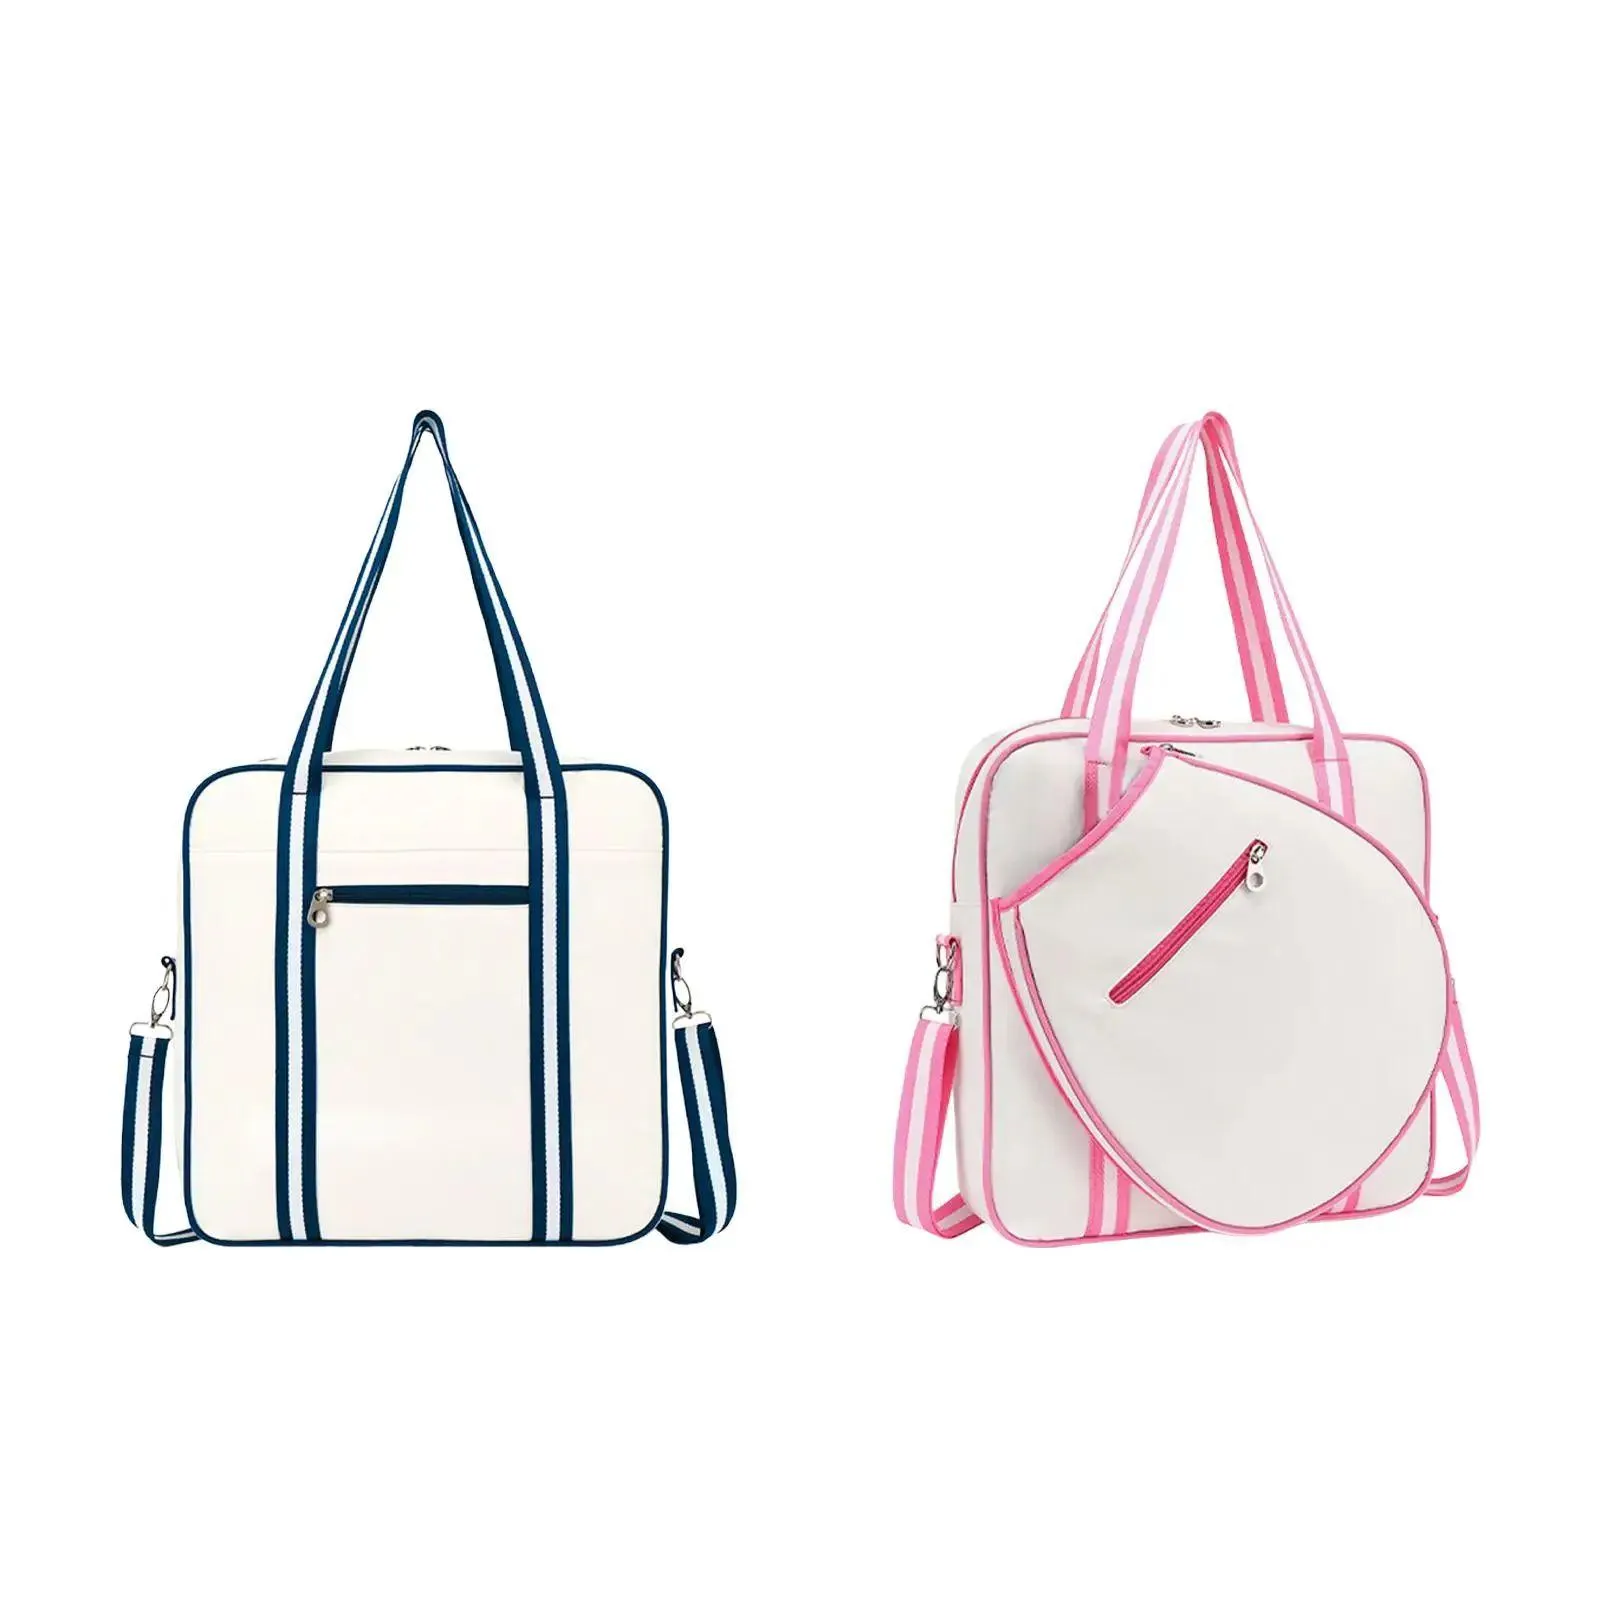 Bags Tennis Shoulder Bag Sports Handbag Versatile Stylish with Multi Pockets Anti Scratches for Pickleball Paddles, Badminton Racquet